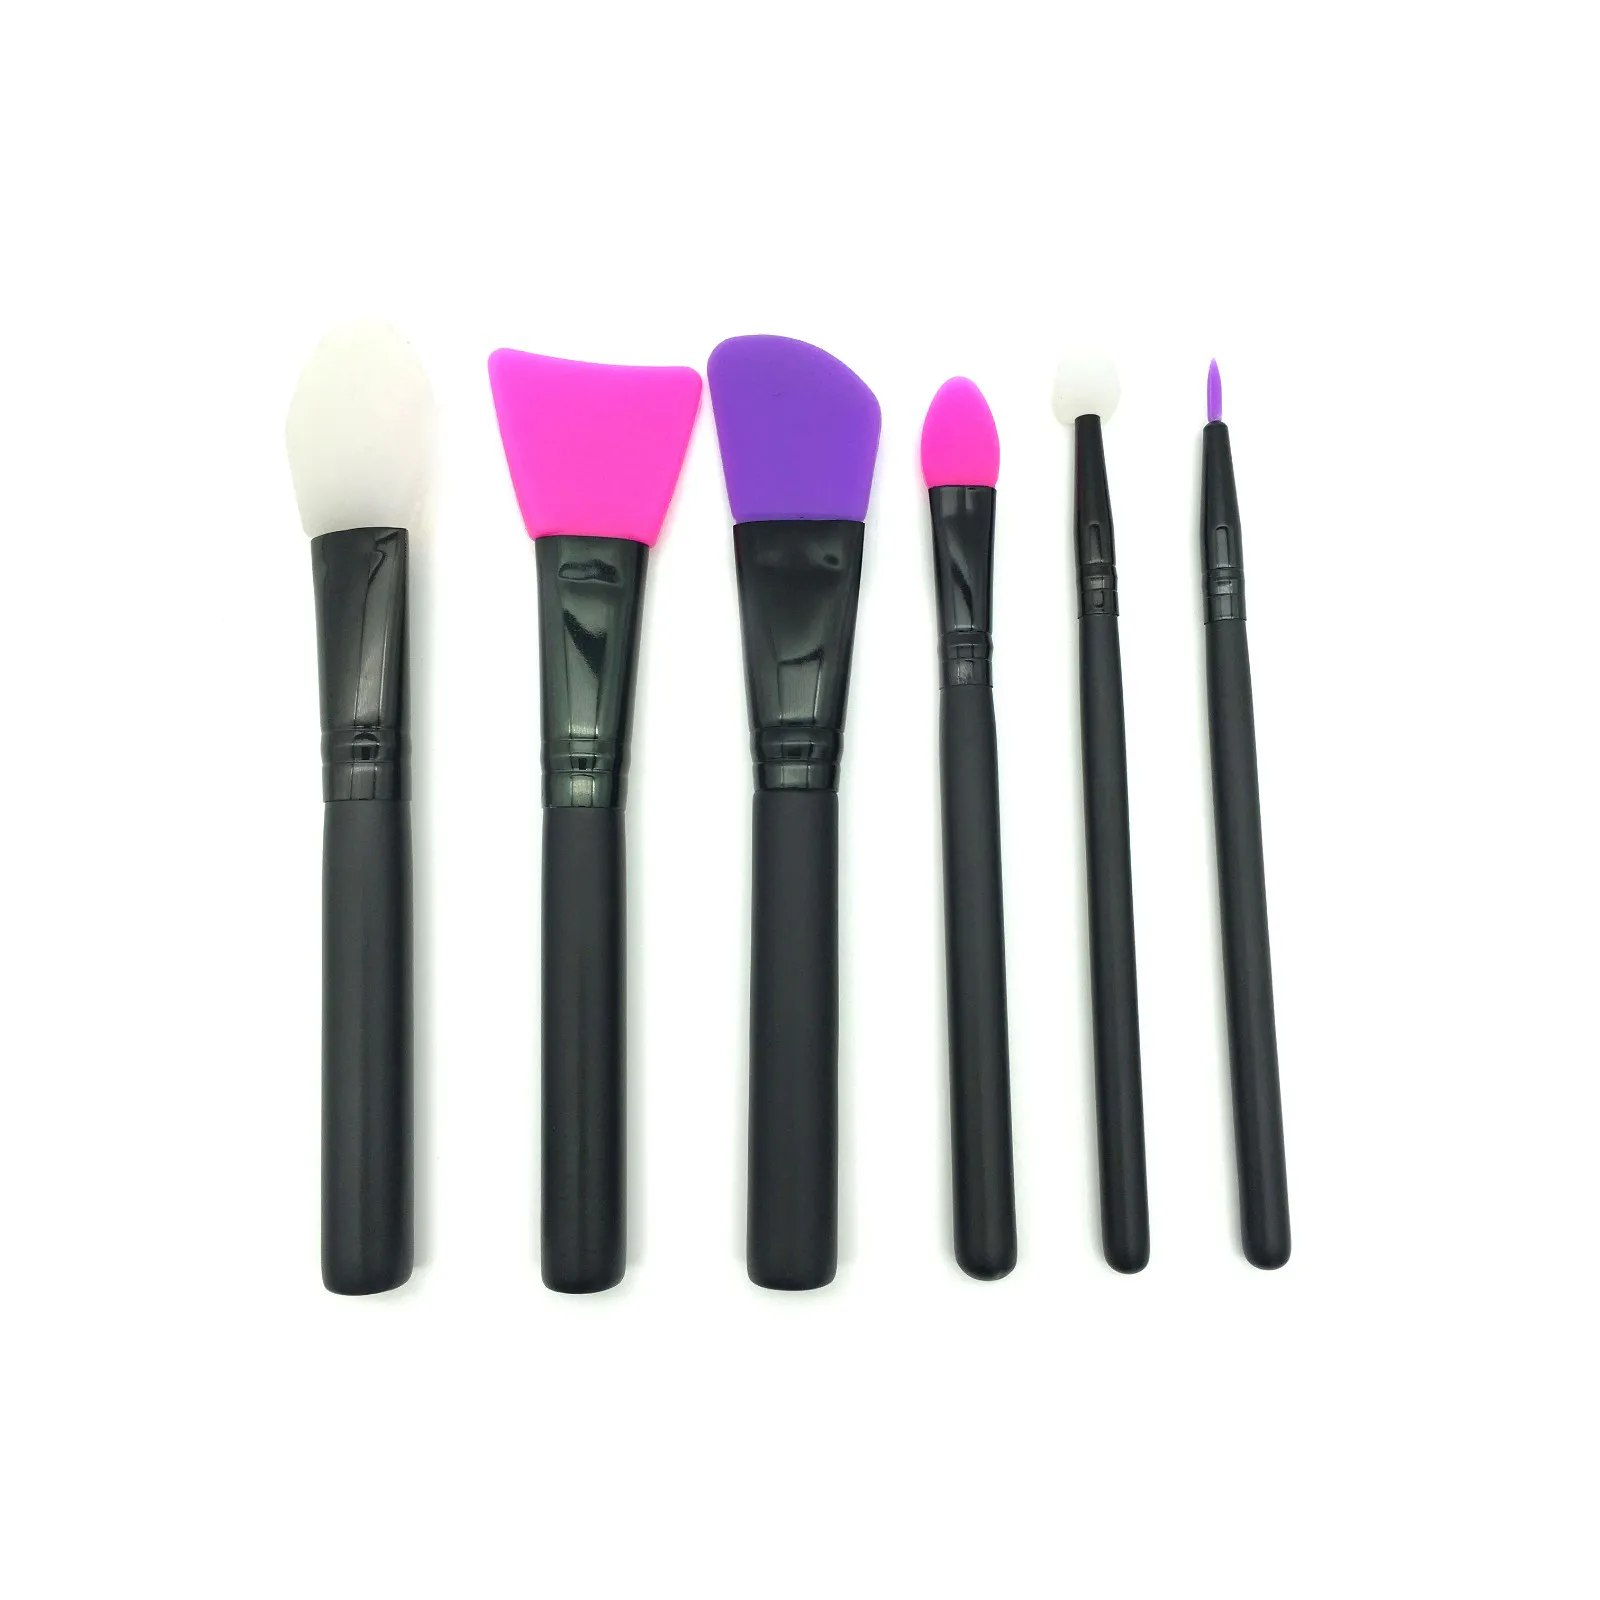 Suprabeauty squirel brush makeup brushes manufacturer